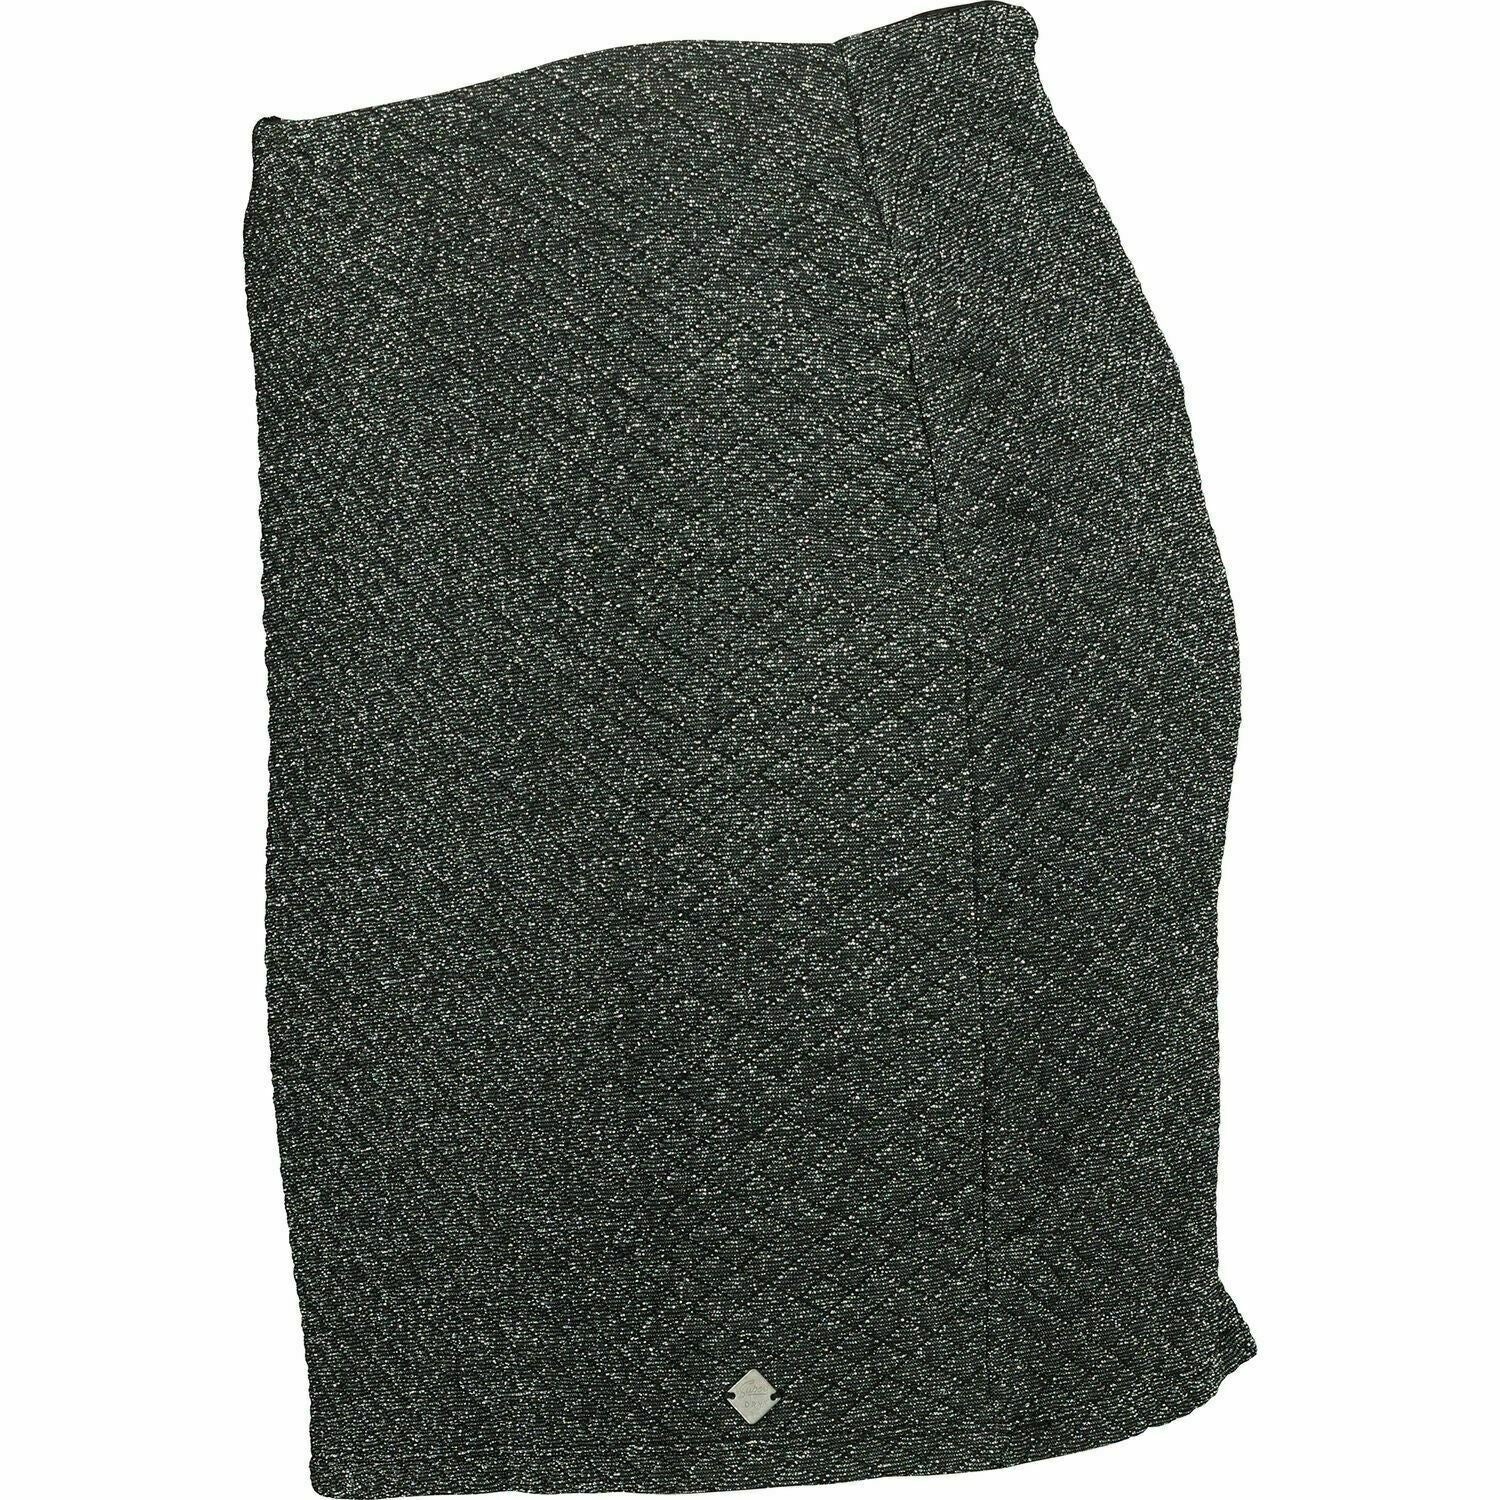 SUPERDRY Women's EDISON Black/Silver Sparkle Mini Skirt size XS UK 8